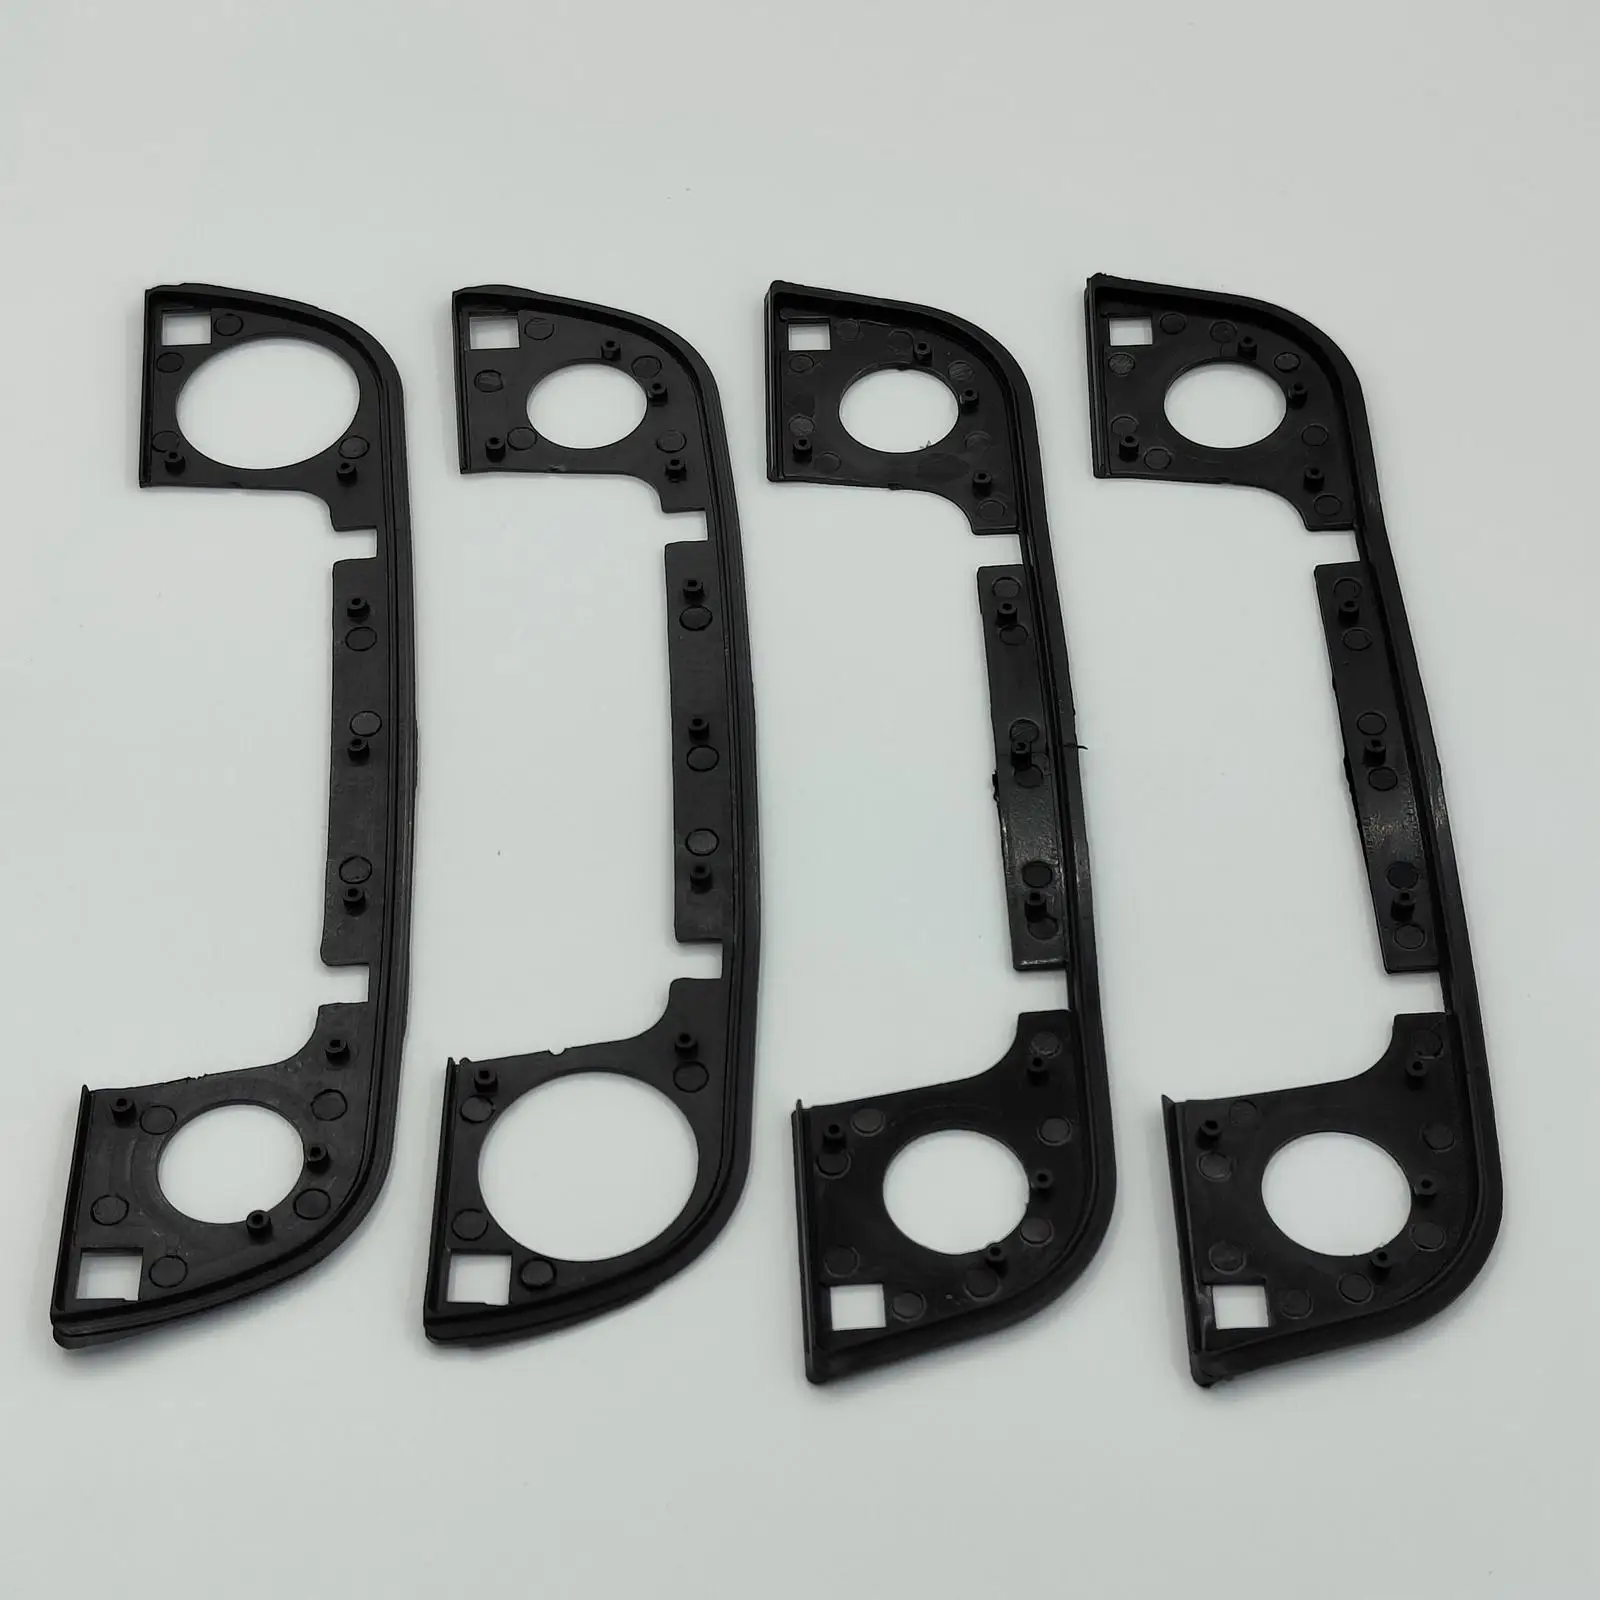 4Pcs Door Handle Gasket Rubber Seals, for  E36 E34 E32 Replacement